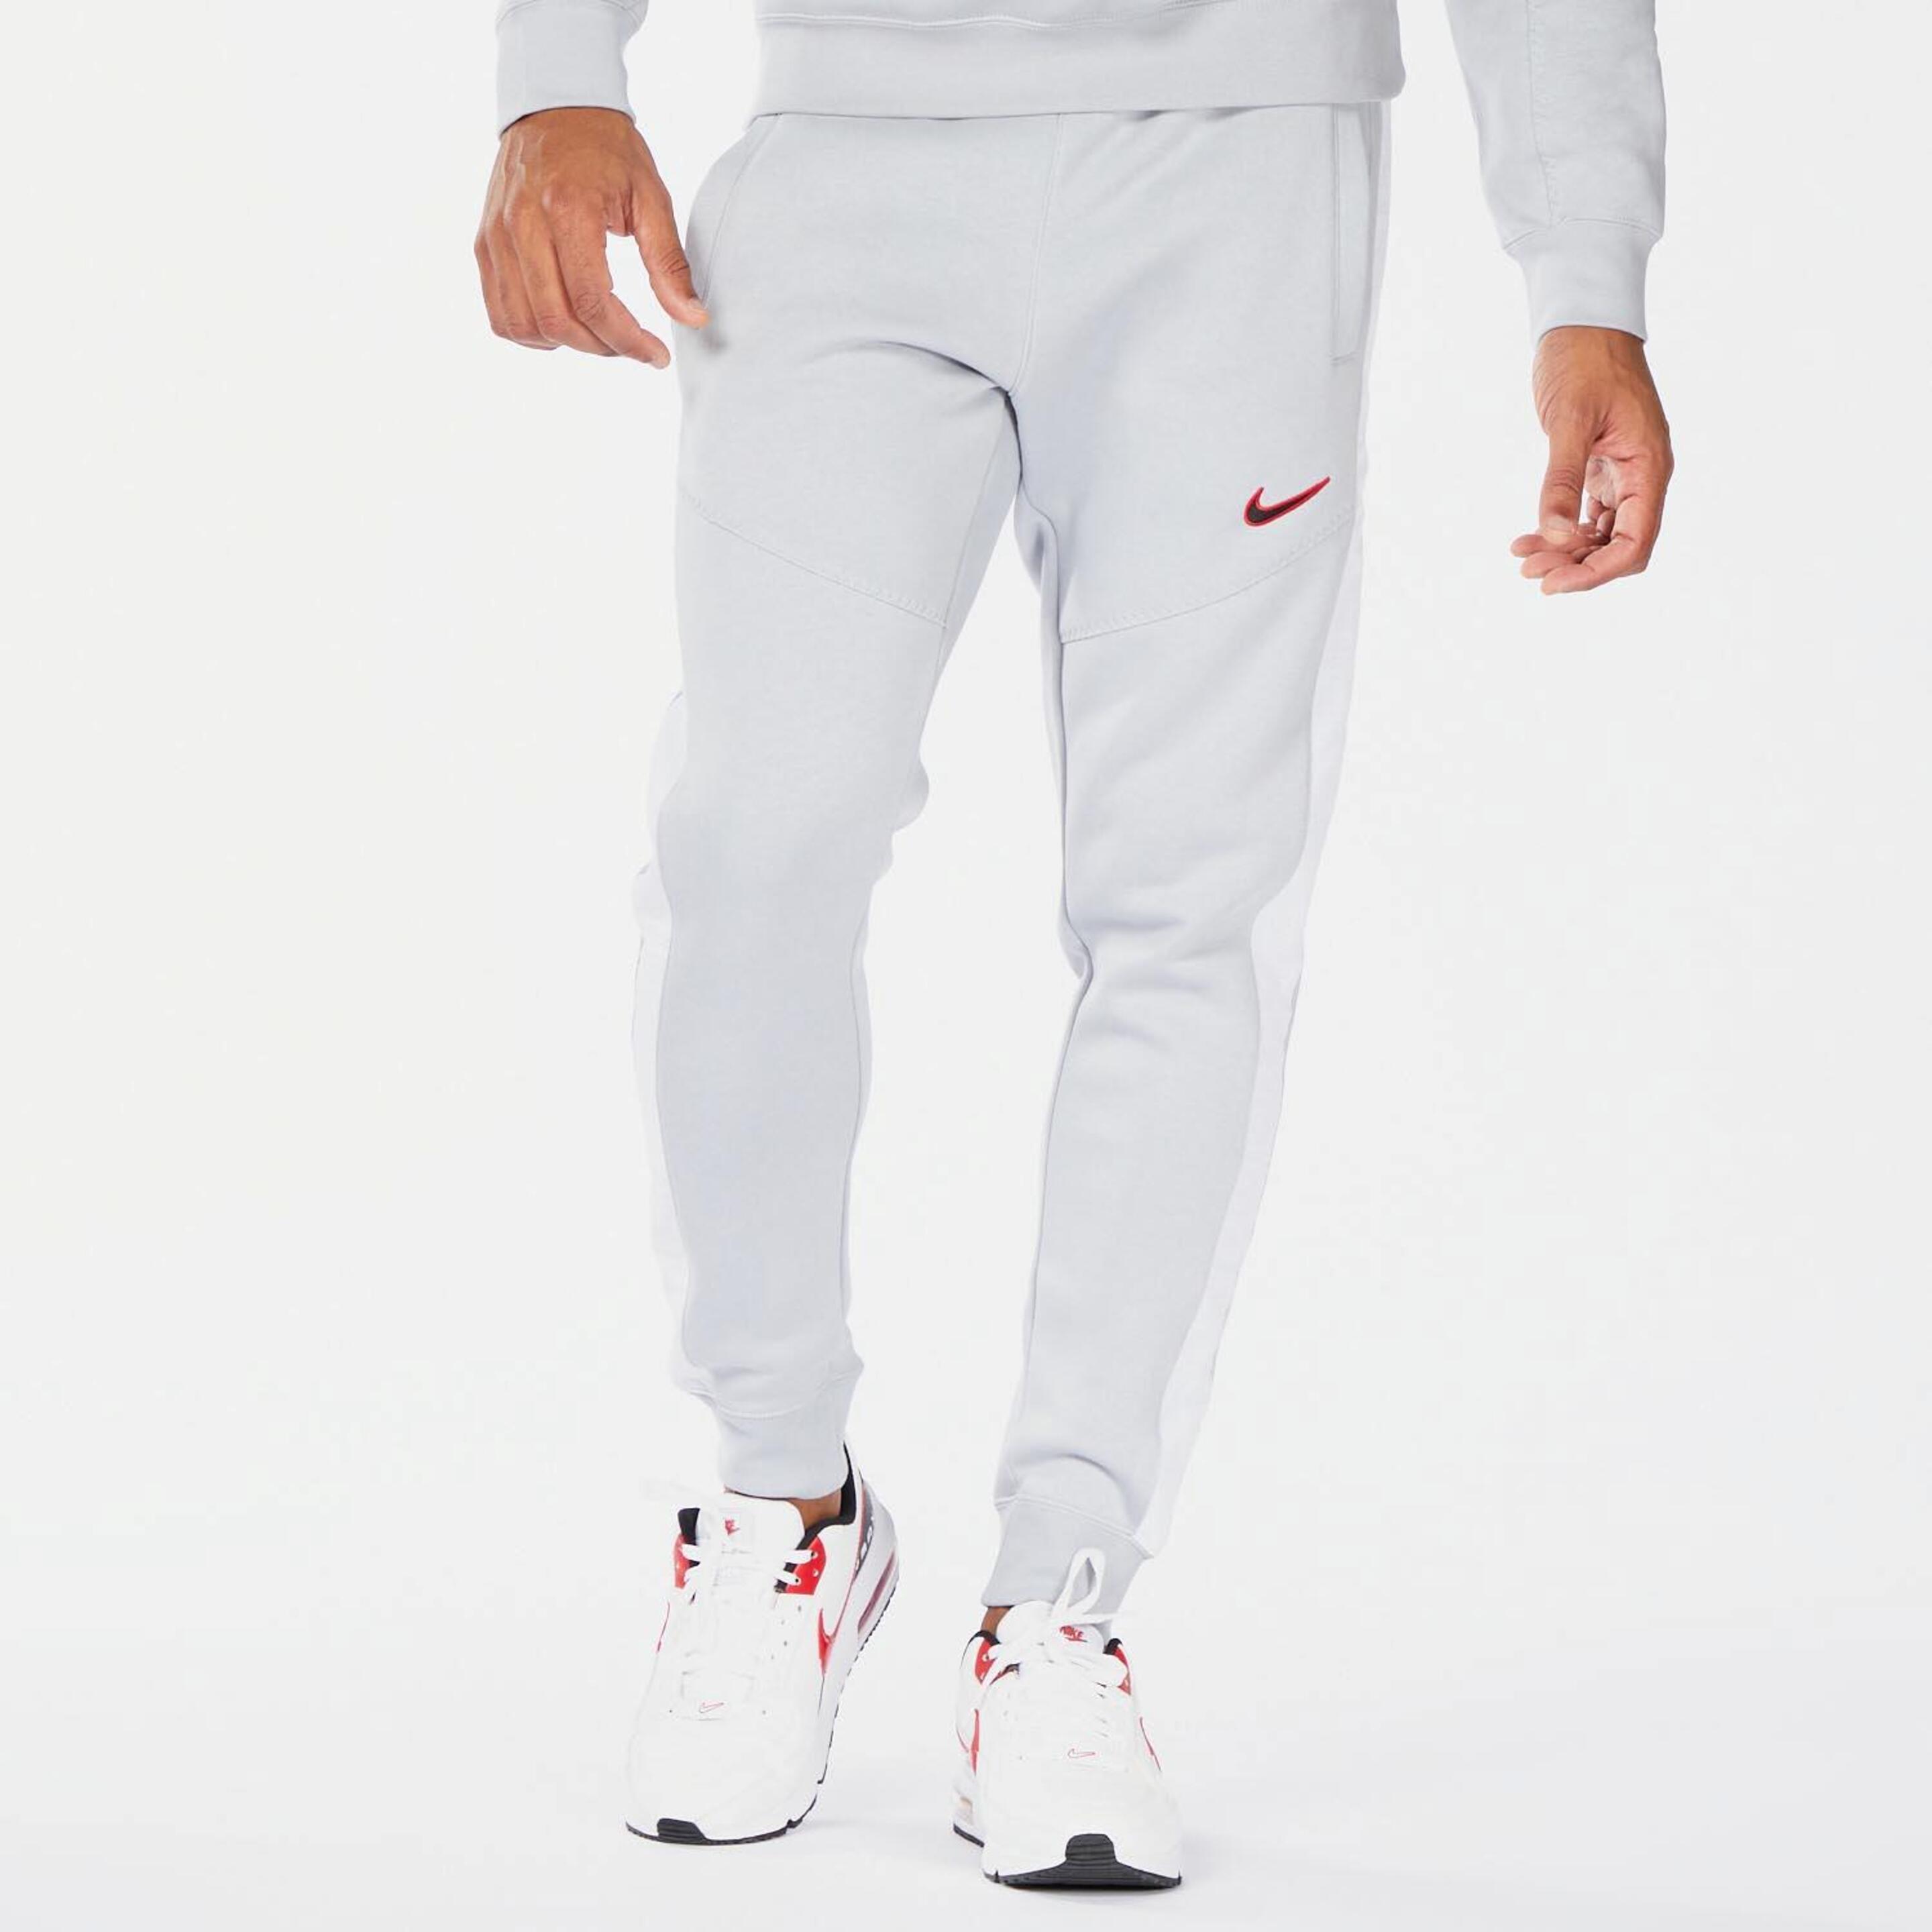 Nike Sport - gris - Pantalón Hombre